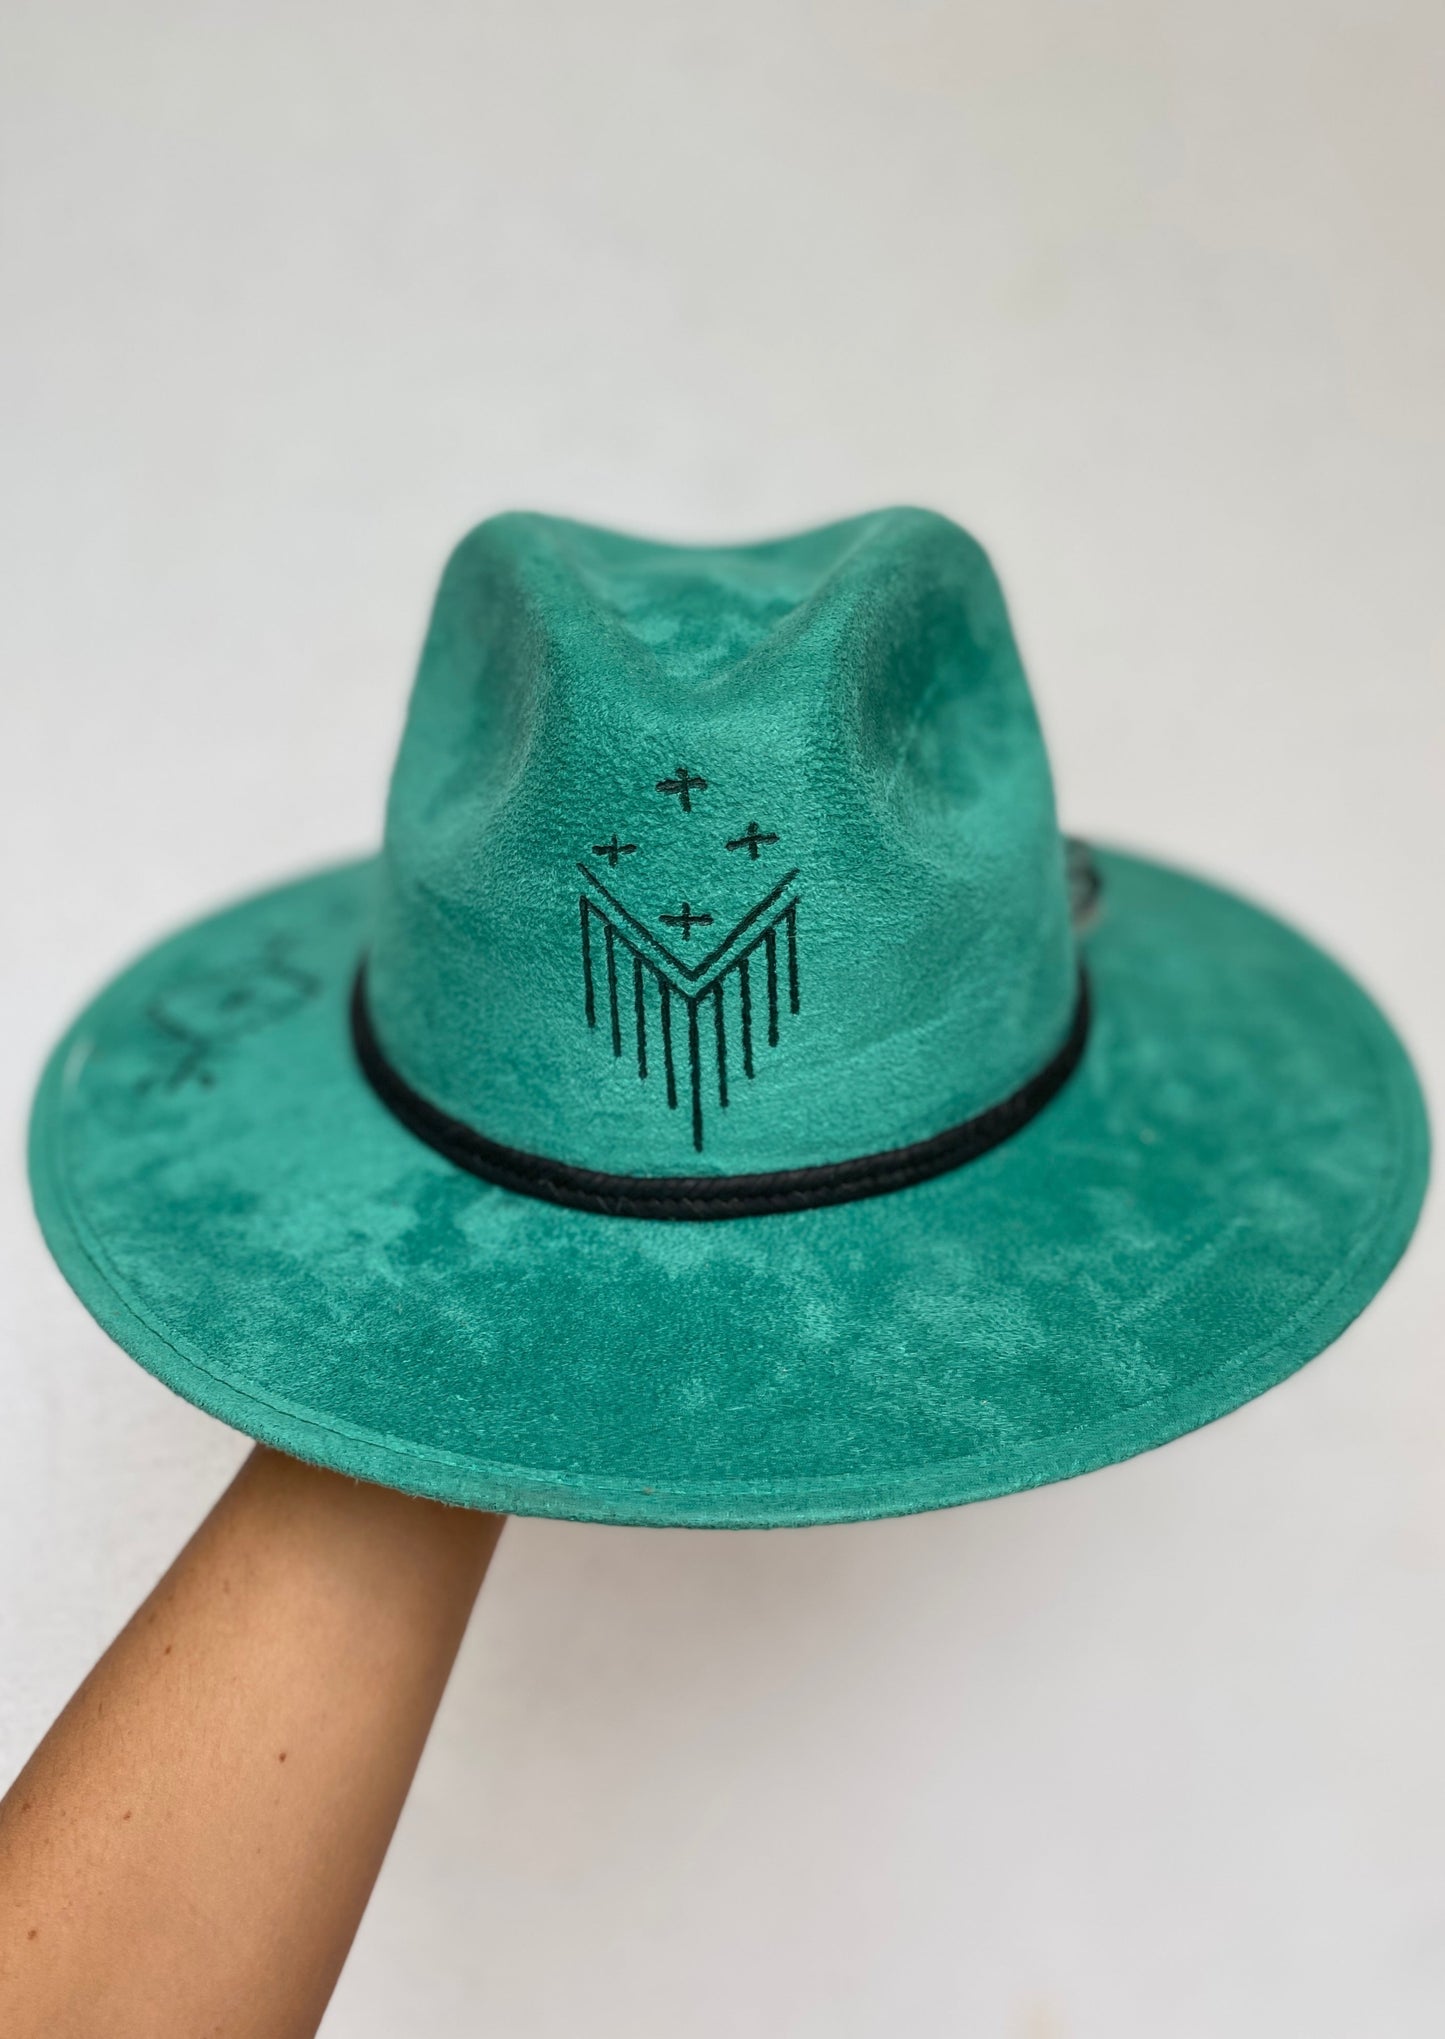 Sombrero gamuza verde